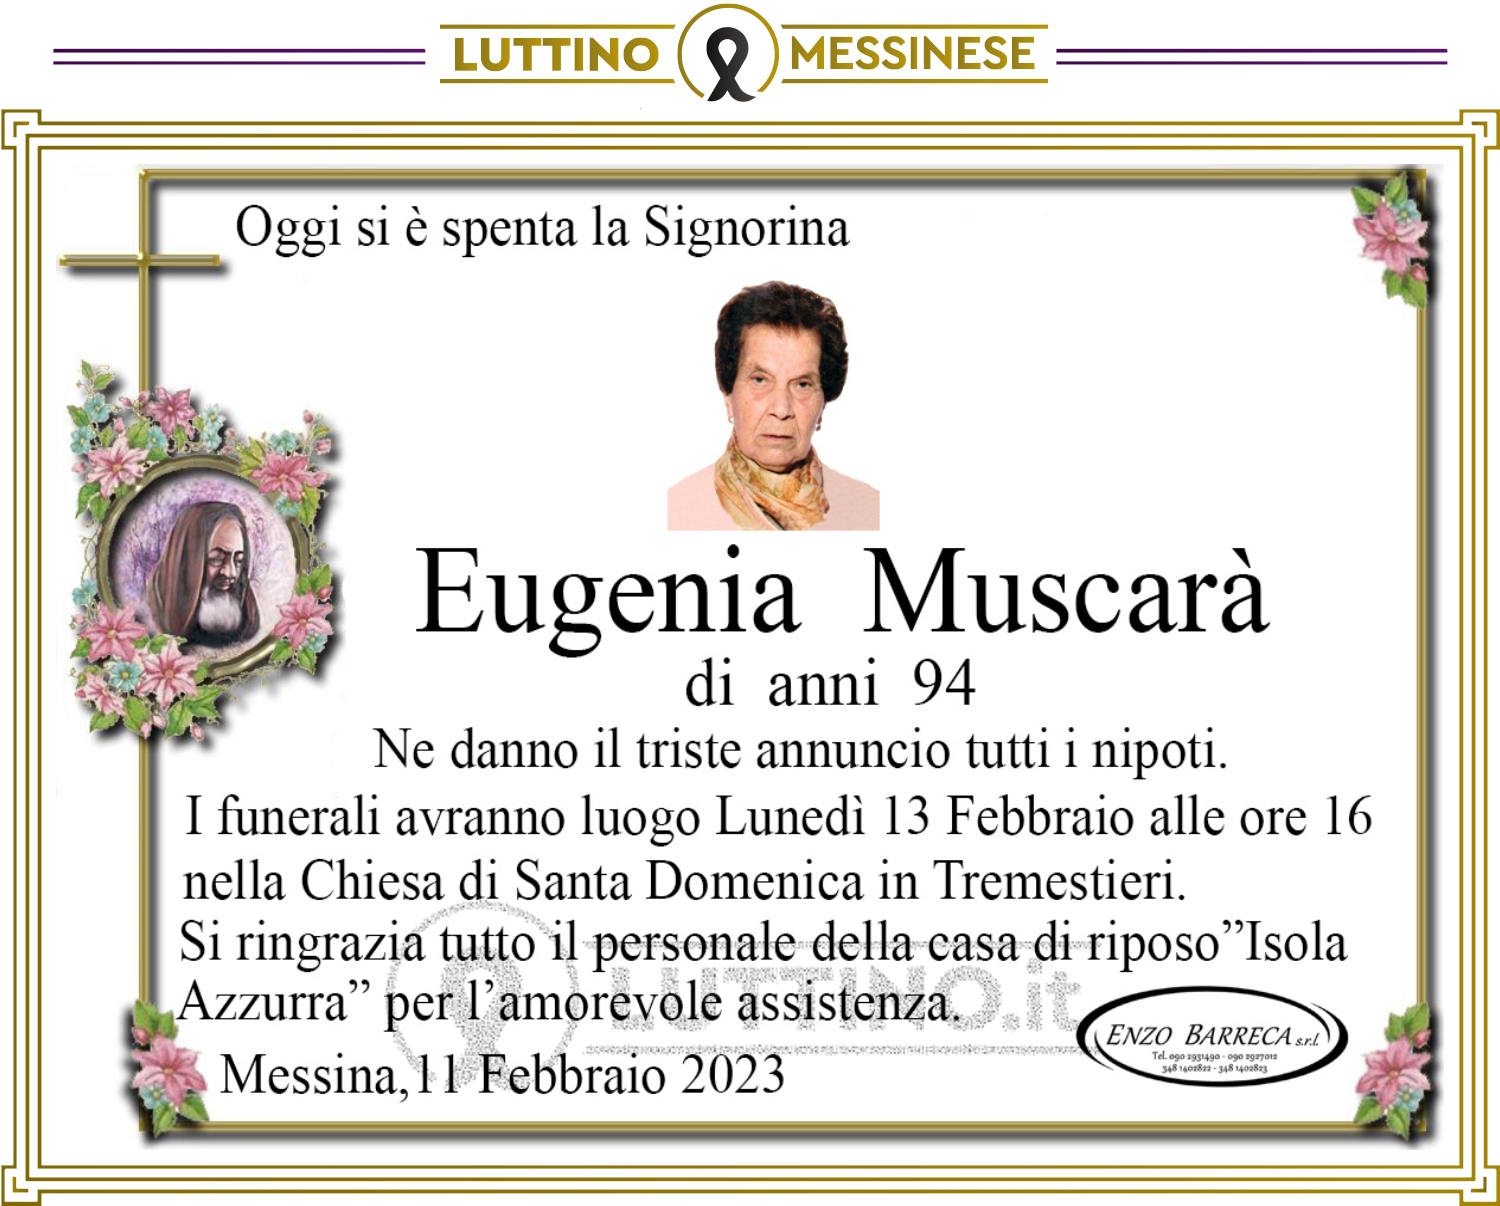 Eugenia Muscarà